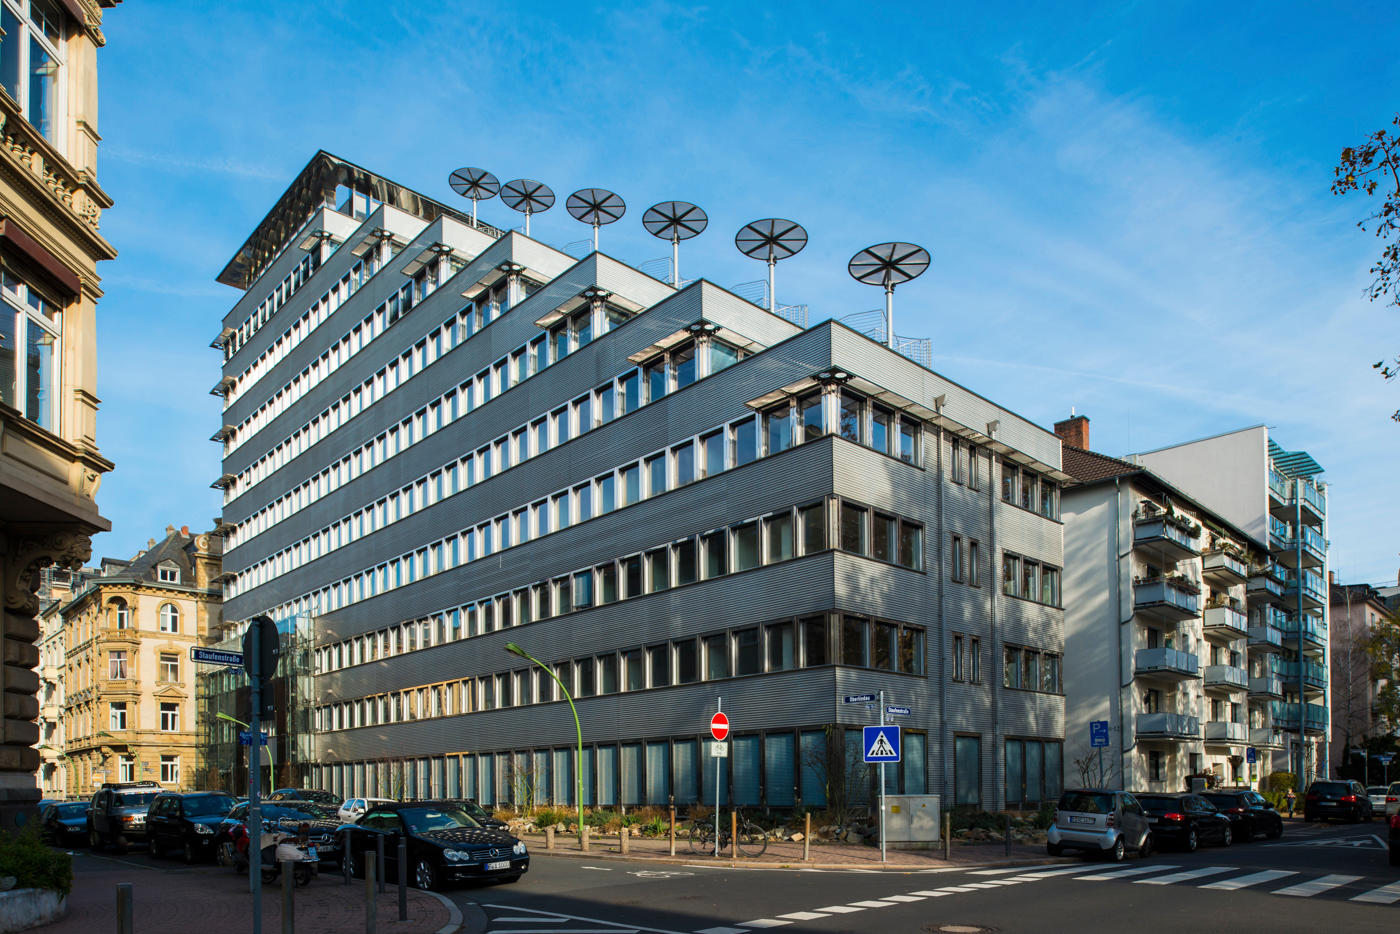 Bilder Art-Invest Real Estate Management GmbH & Co. KG | Frankfurt am Main